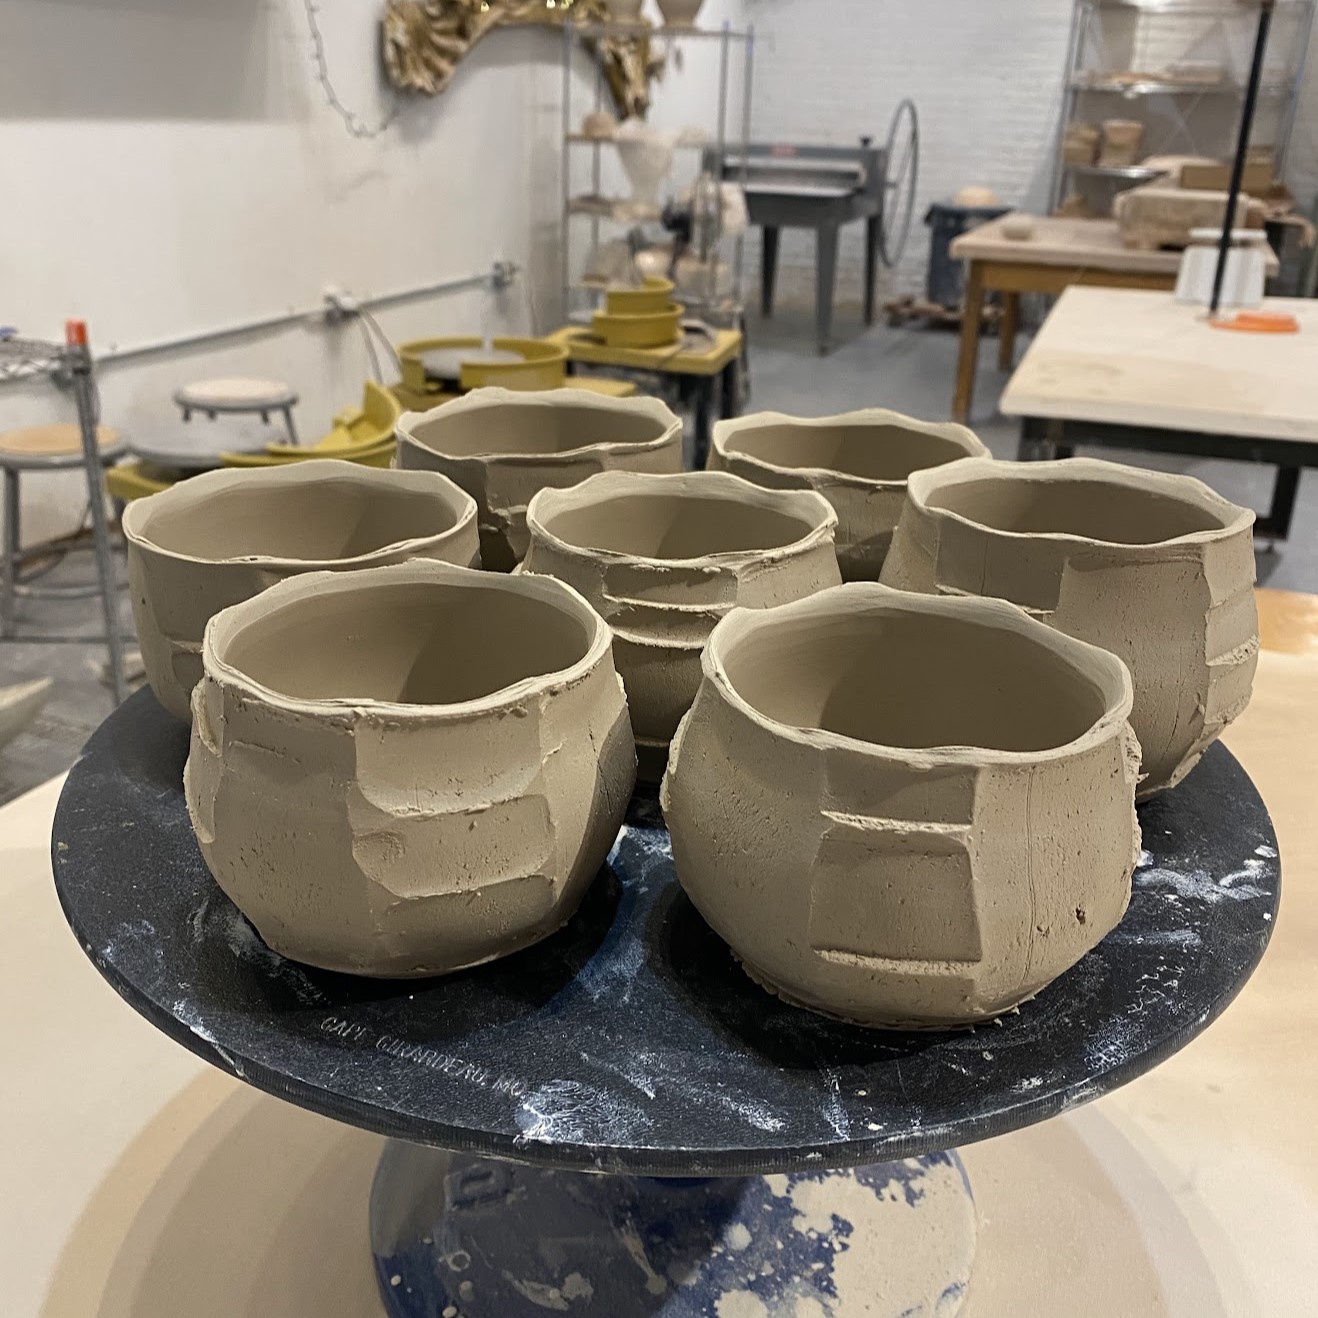 Altered mugs in progress